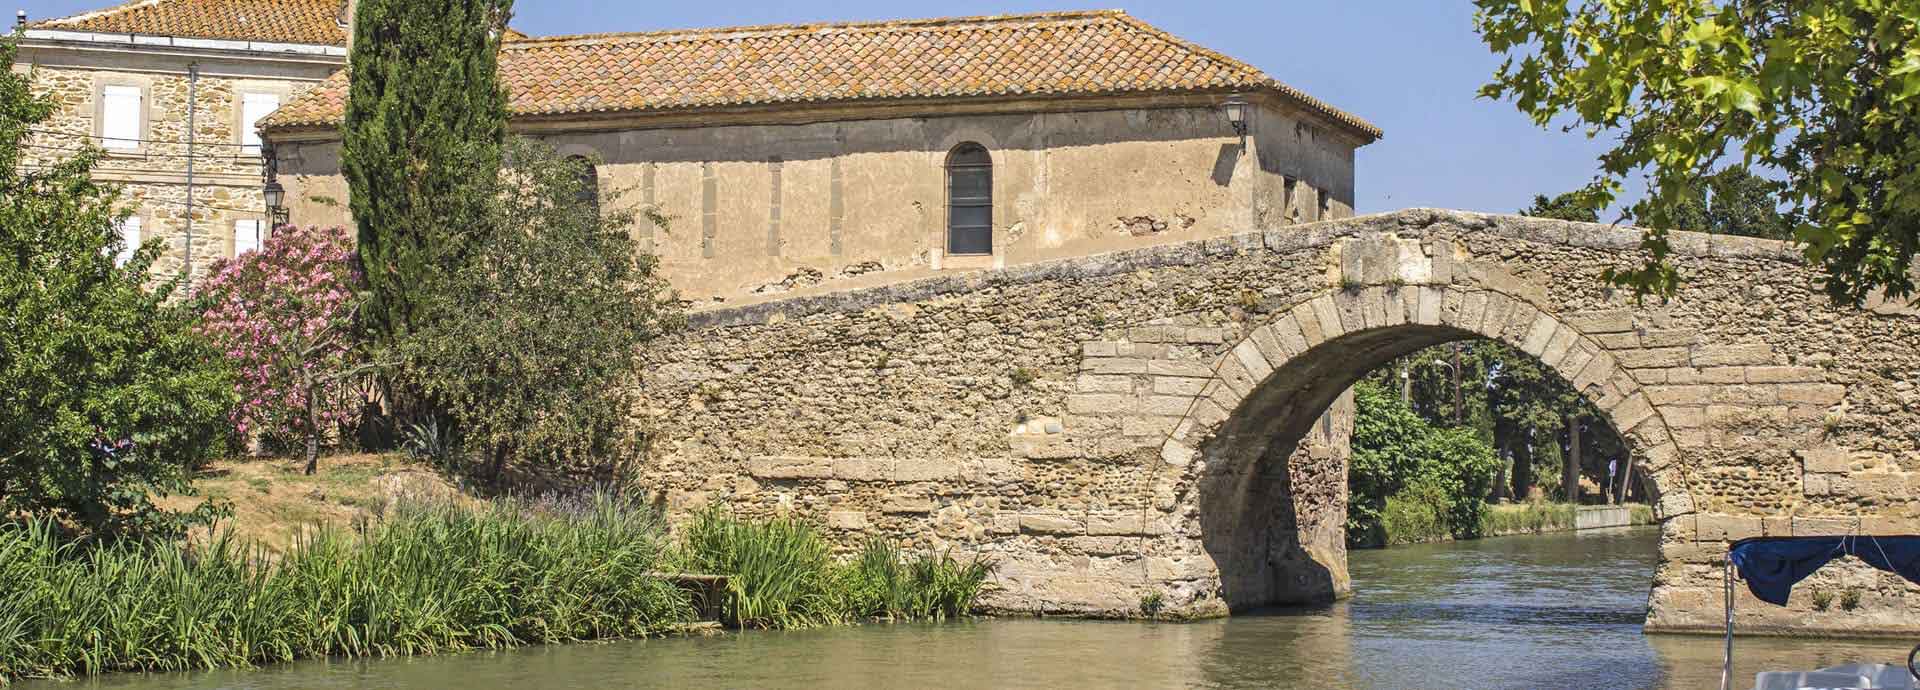 Der Canal du Midi und Pont Neuf de Somail im Département Aude